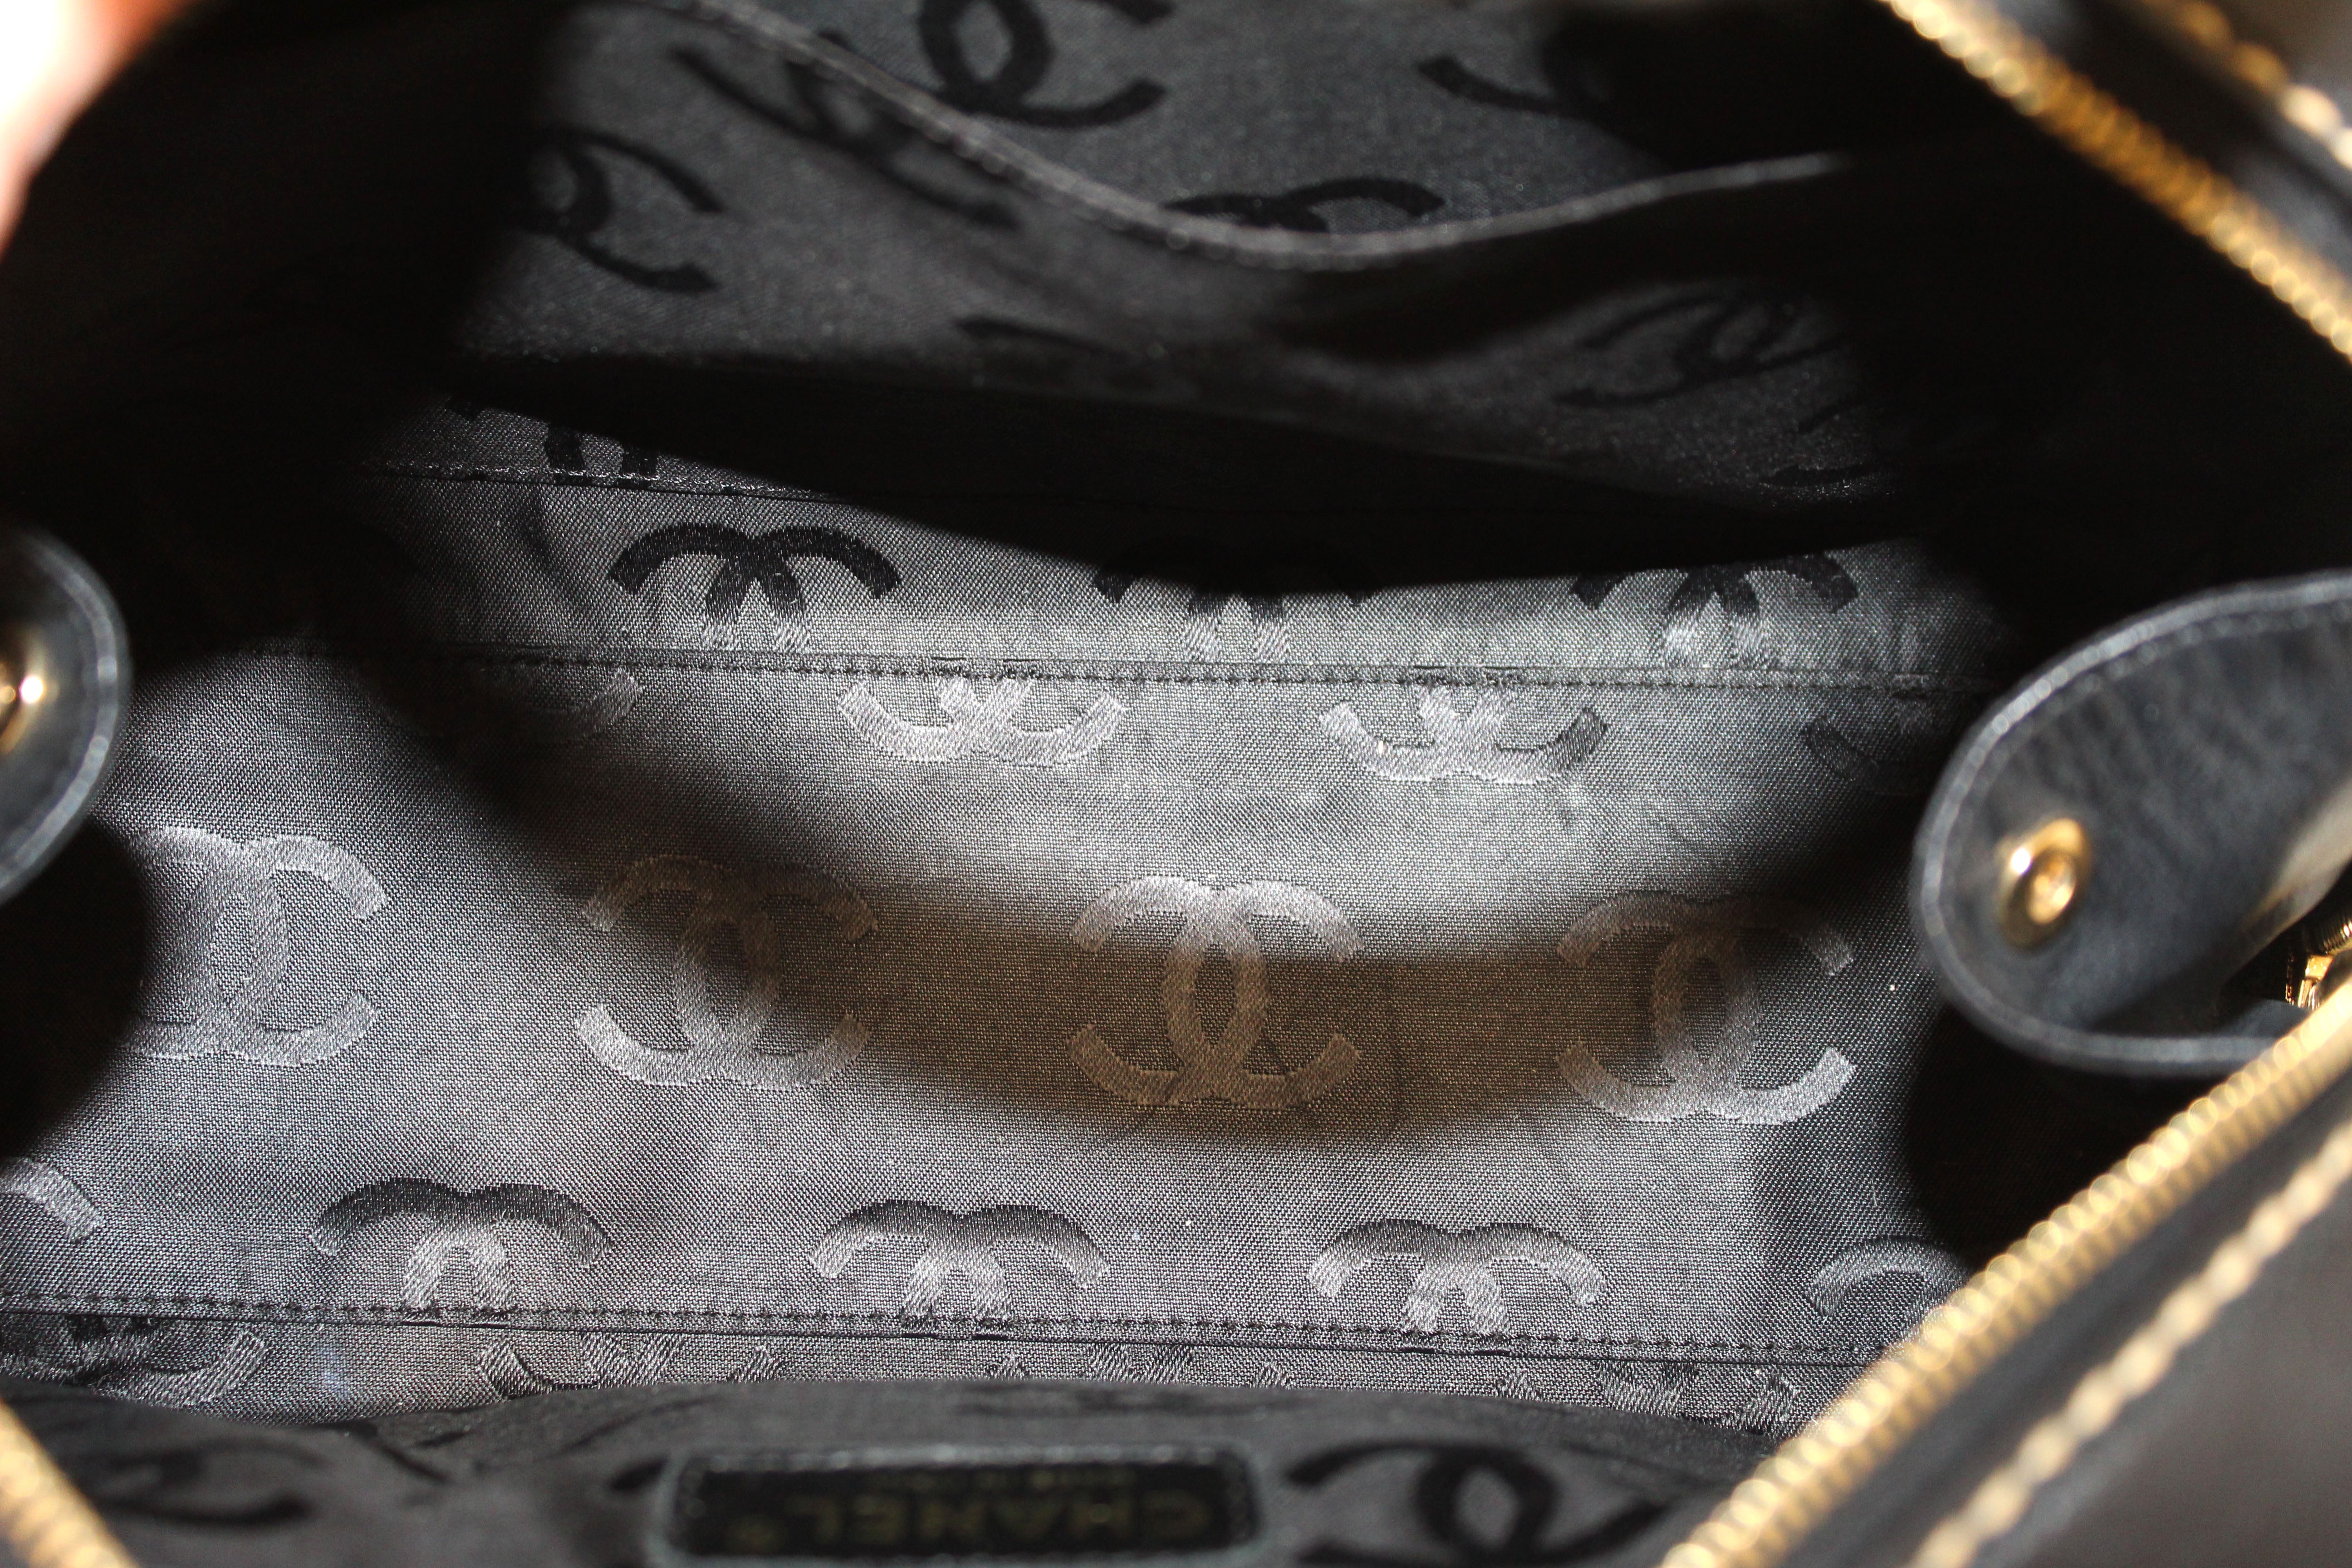 Chanel Surpique Bowler Bag